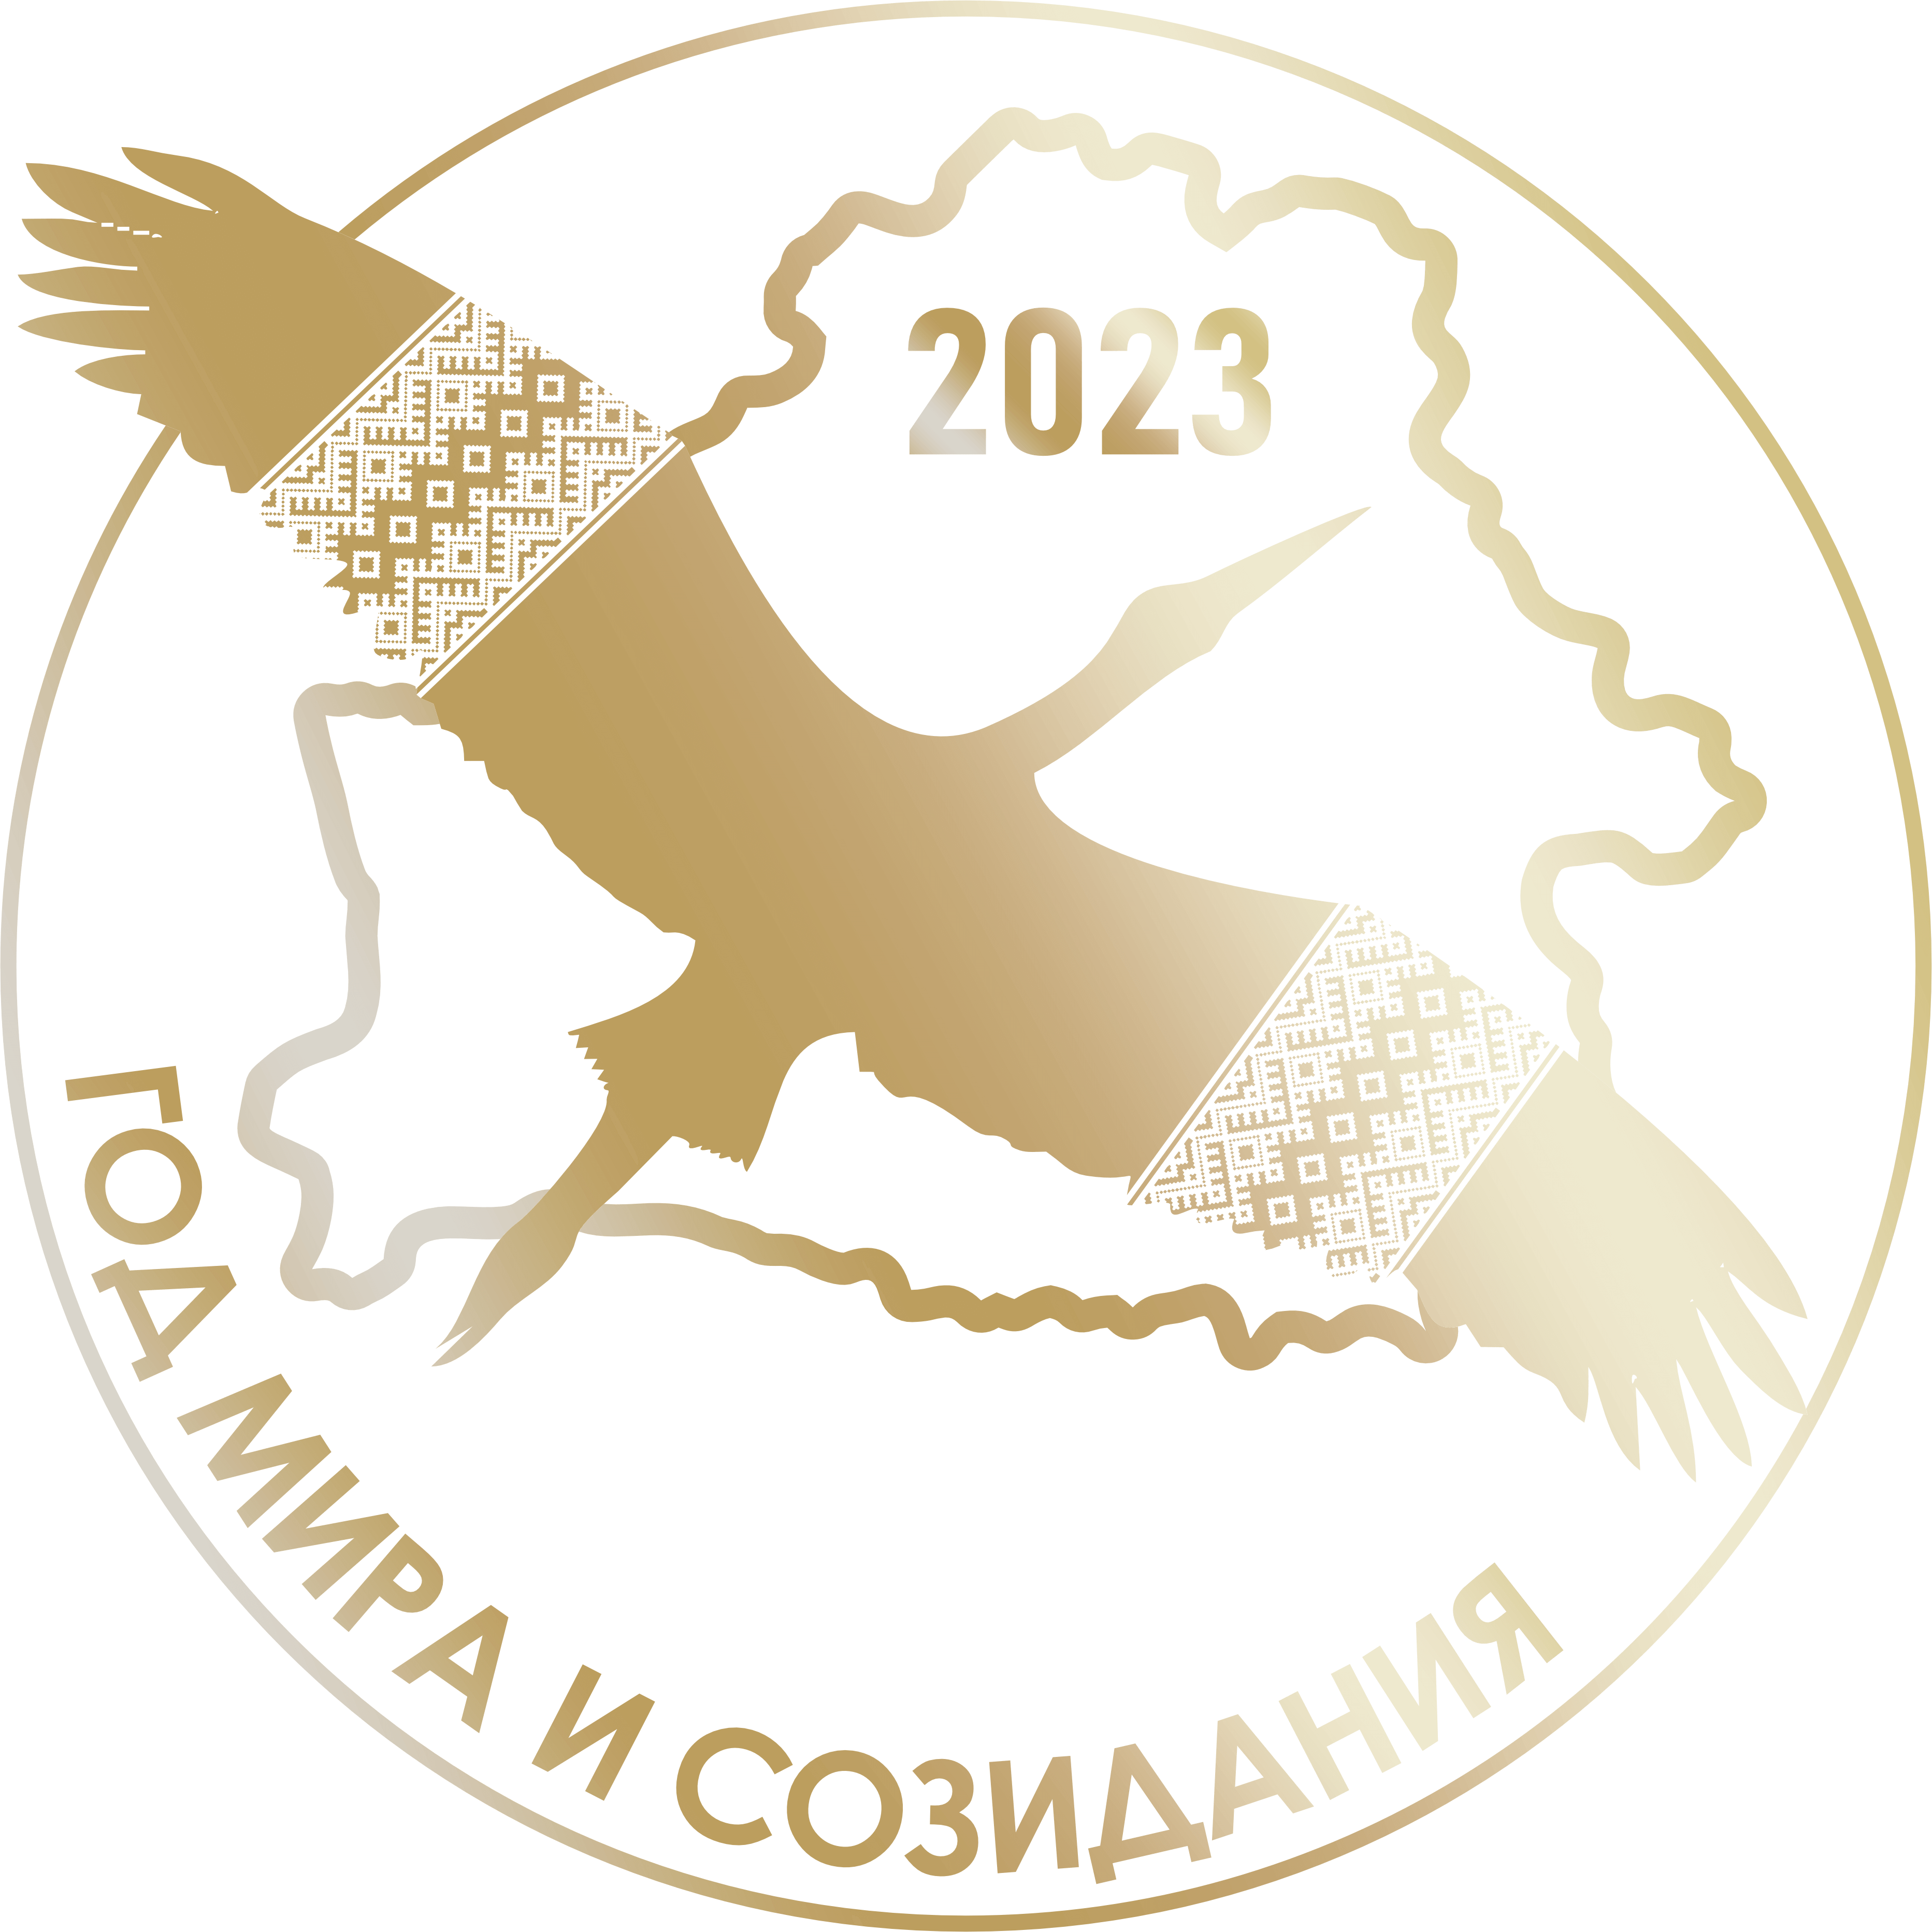 Логотип ГОД МИРА И СОЗИДАНИЯ 2023 П.Н.МИШИН